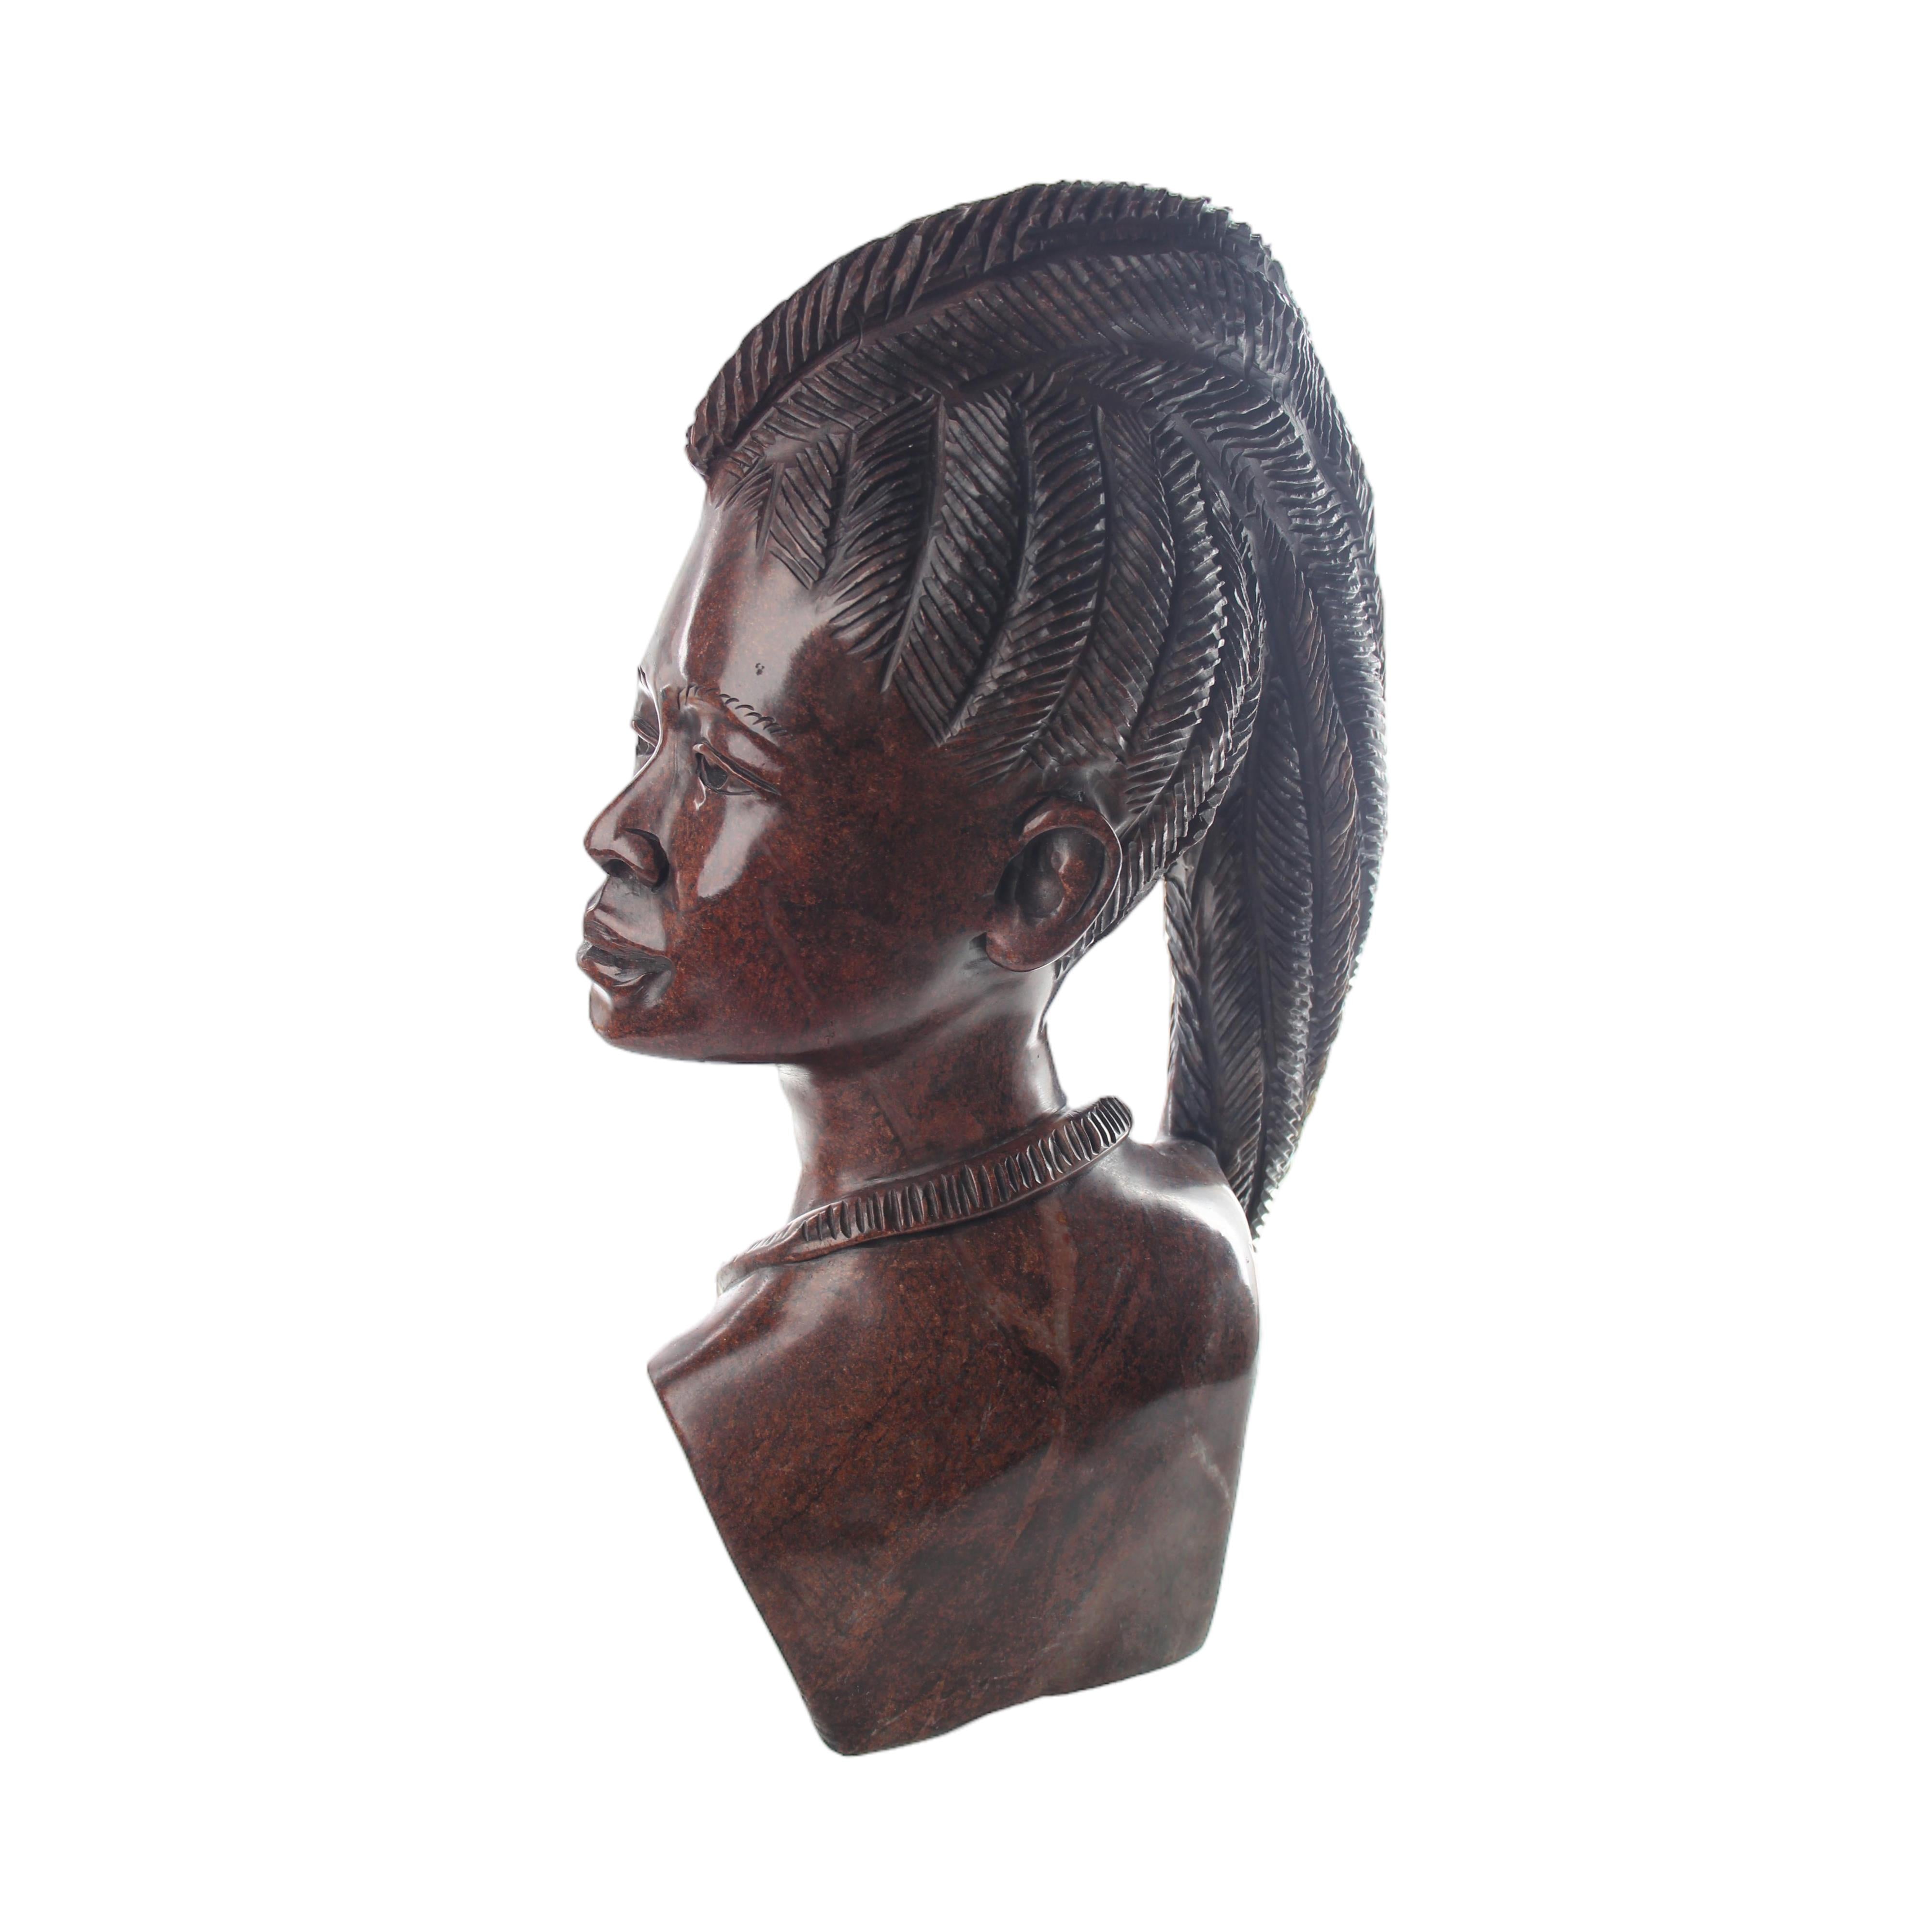 Shona Tribe Serpentine Stone Busts ~15.0" Tall